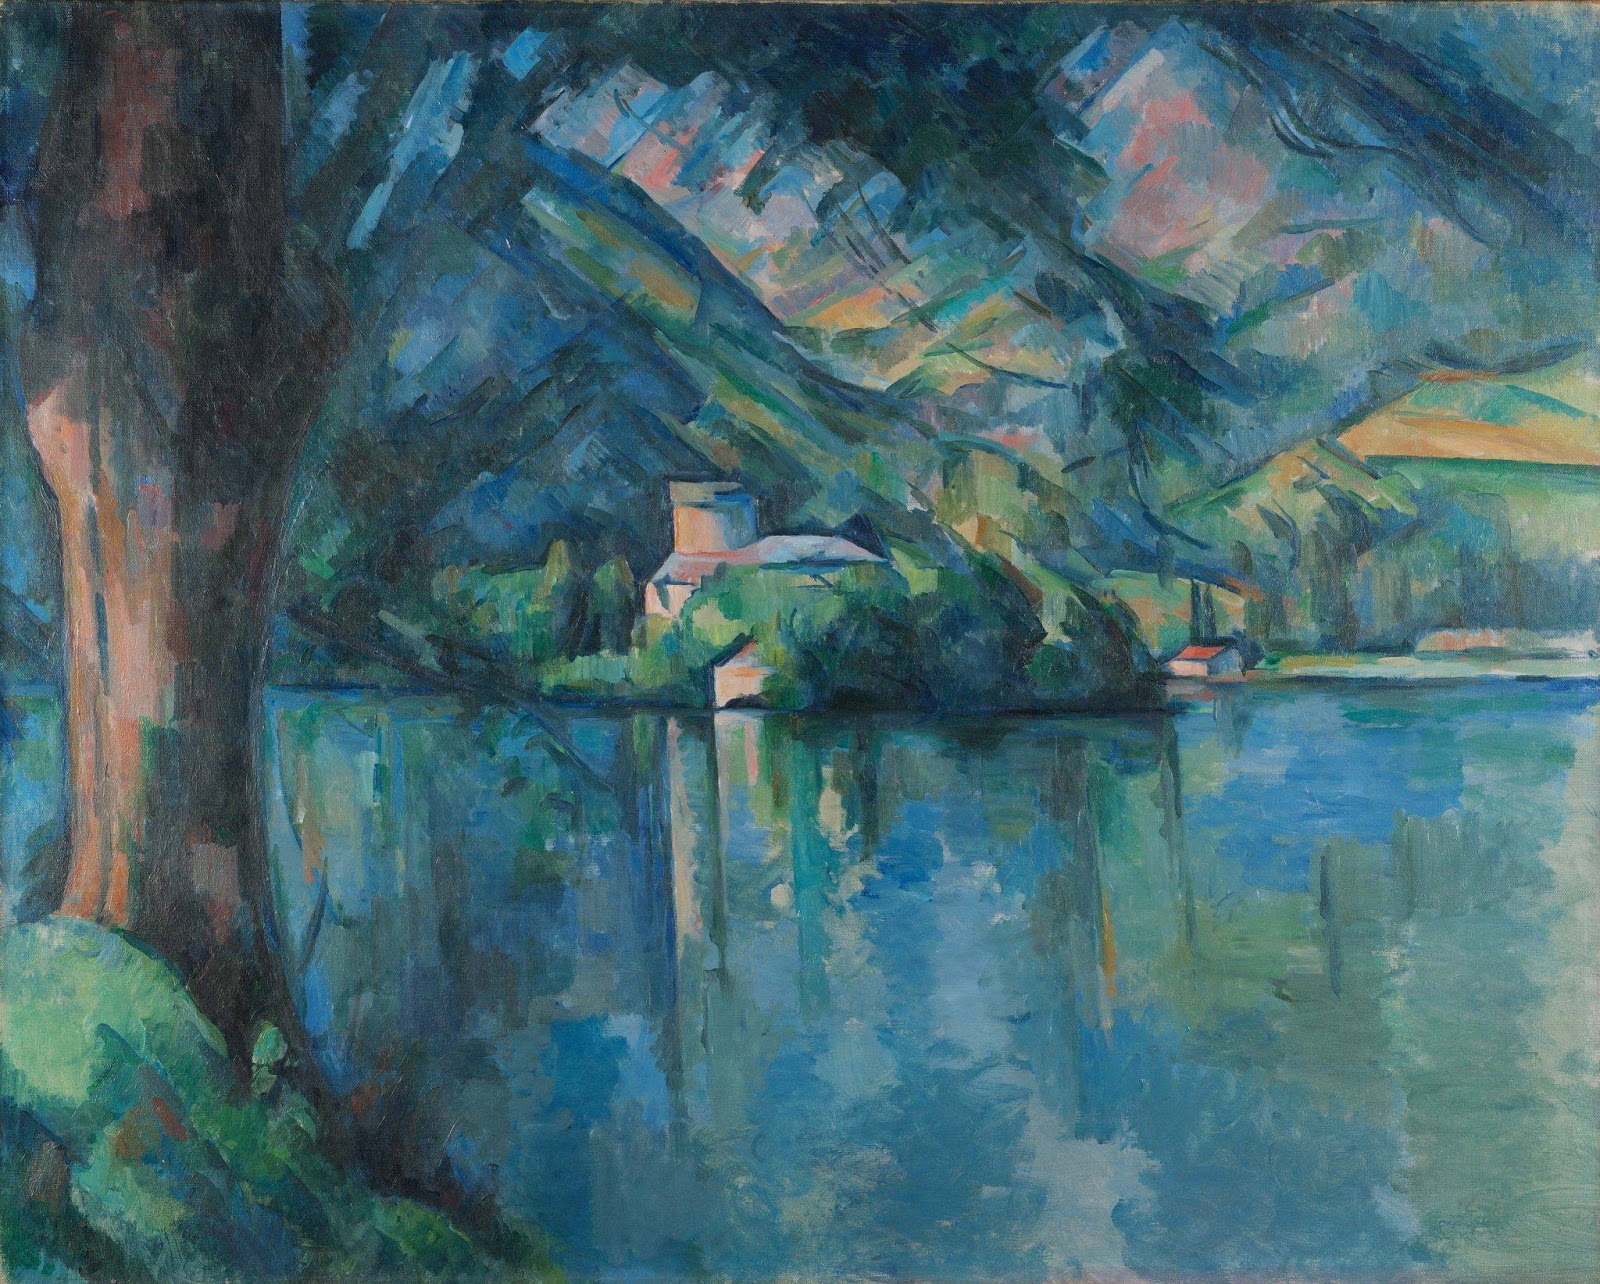 Paul+Cezanne-1839-1906 (187).jpg